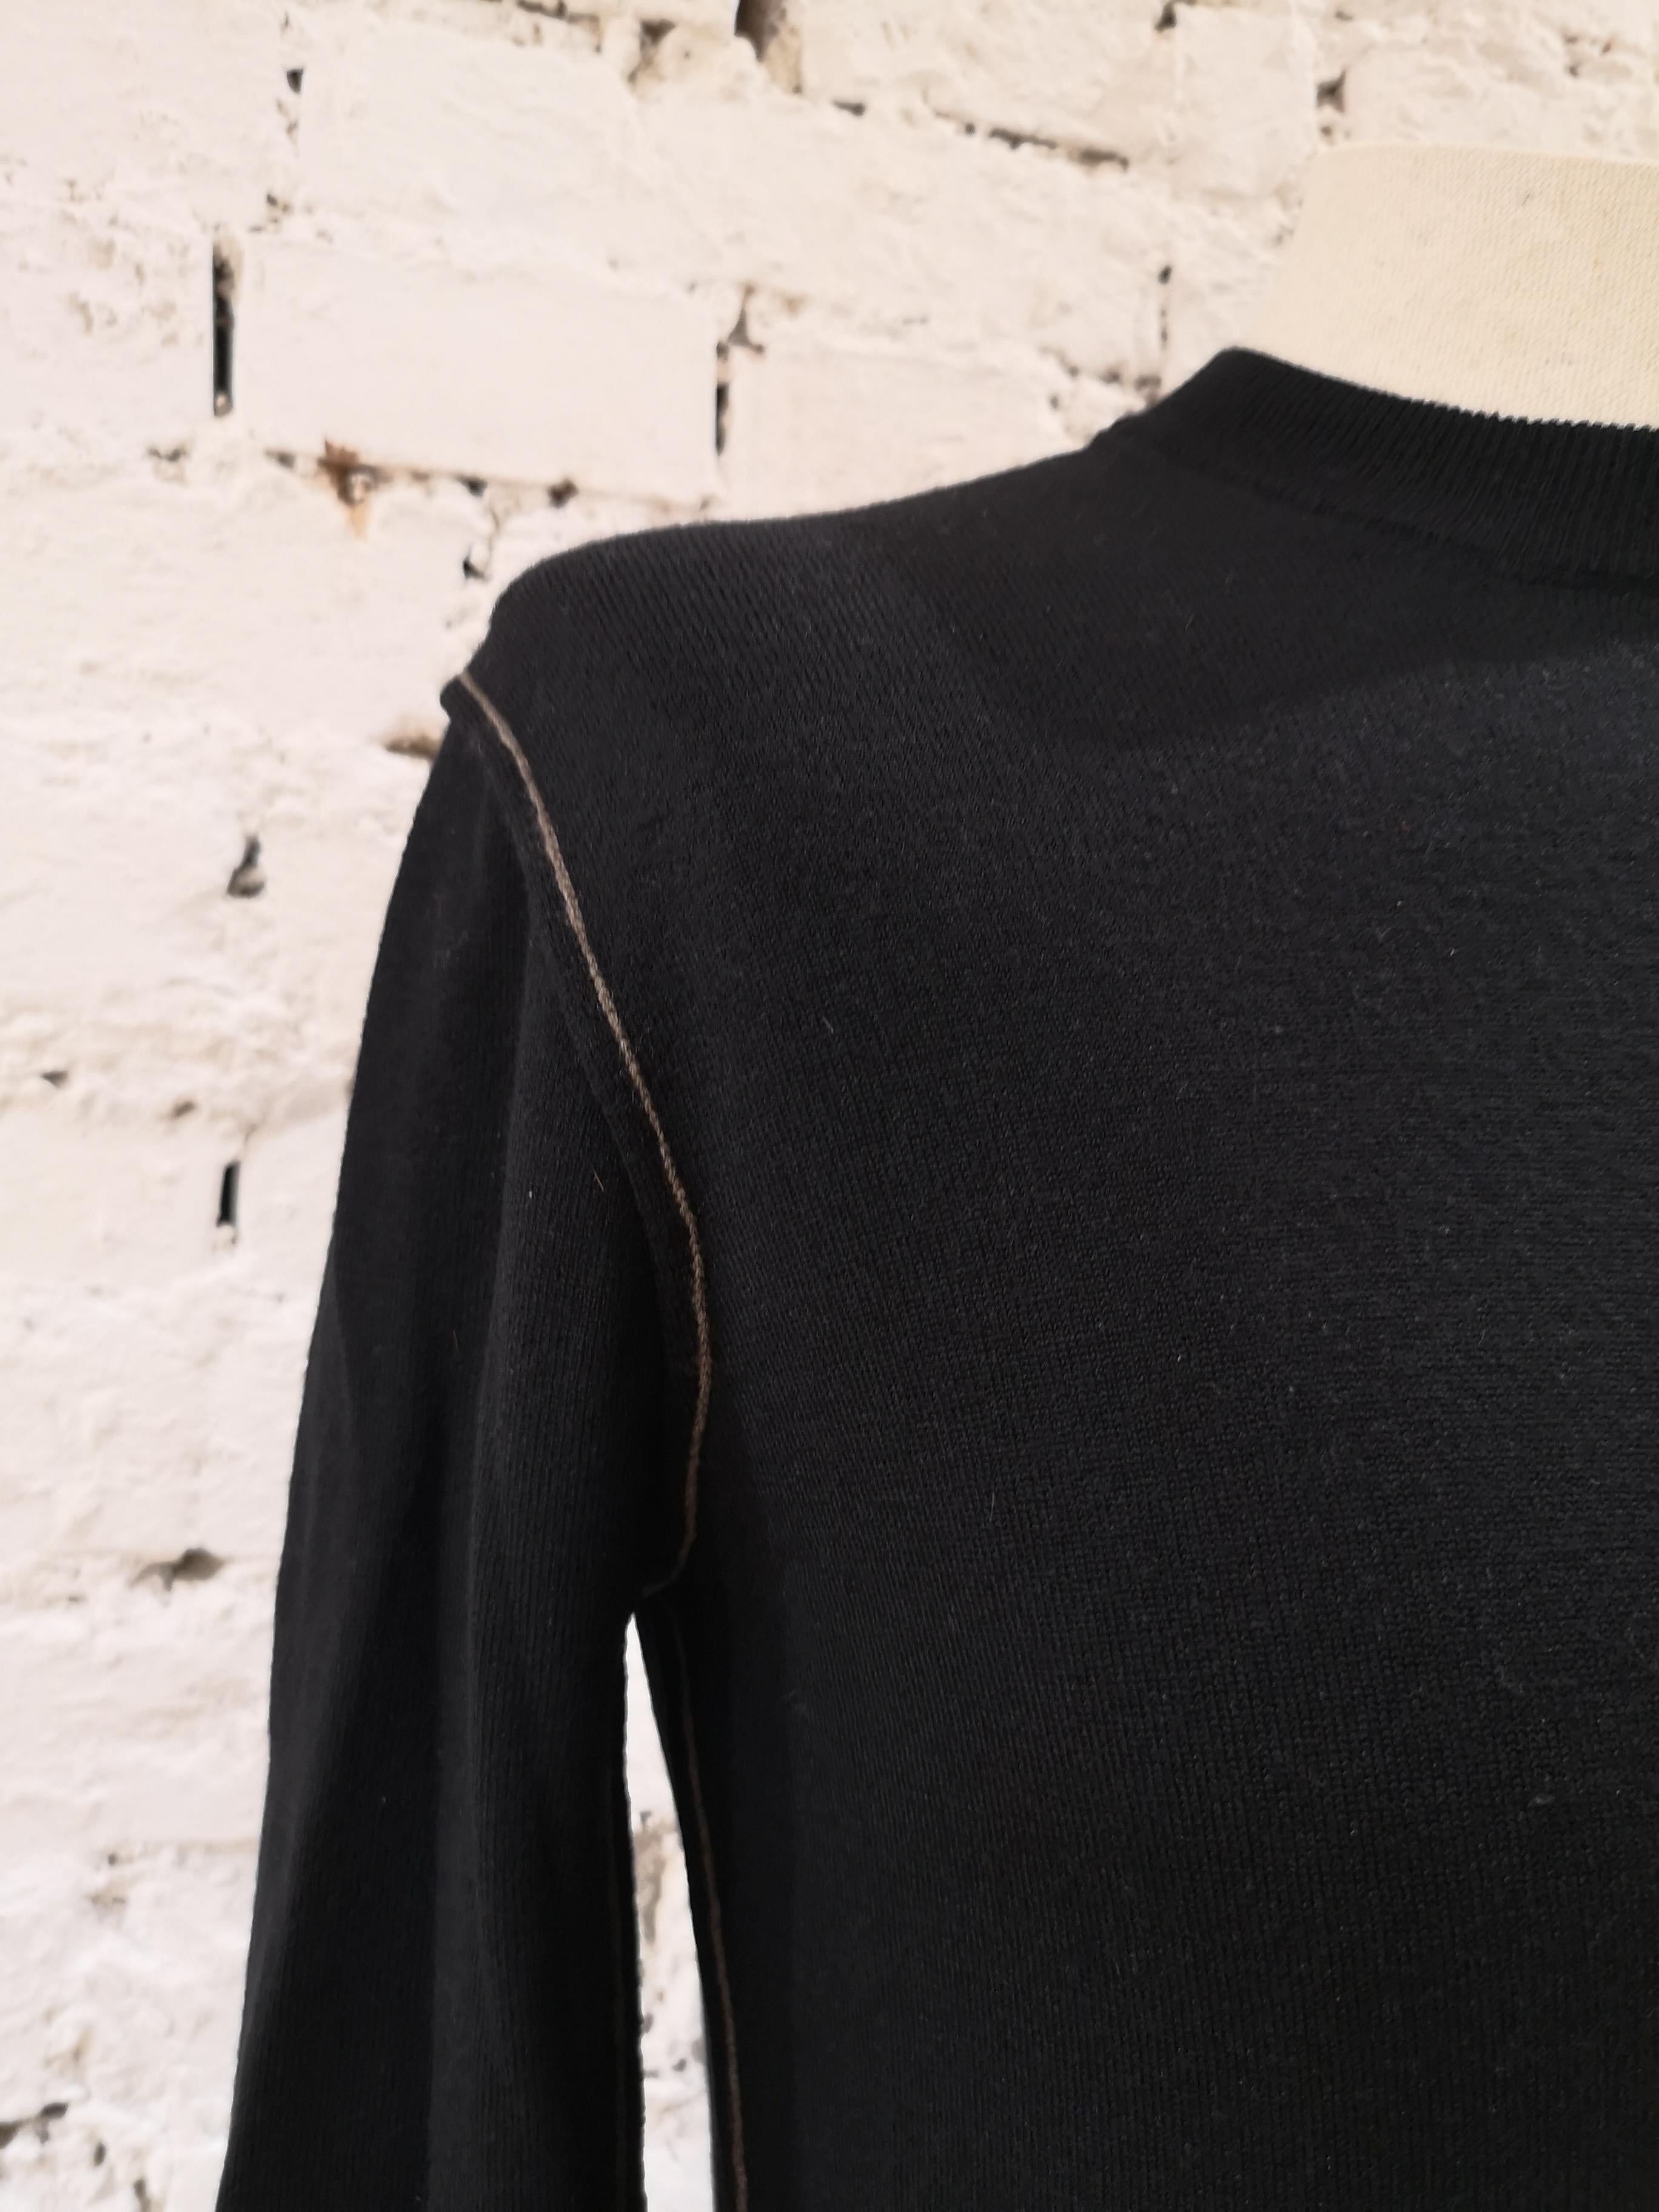 Men's Dolce & Gabbana black wool sweater